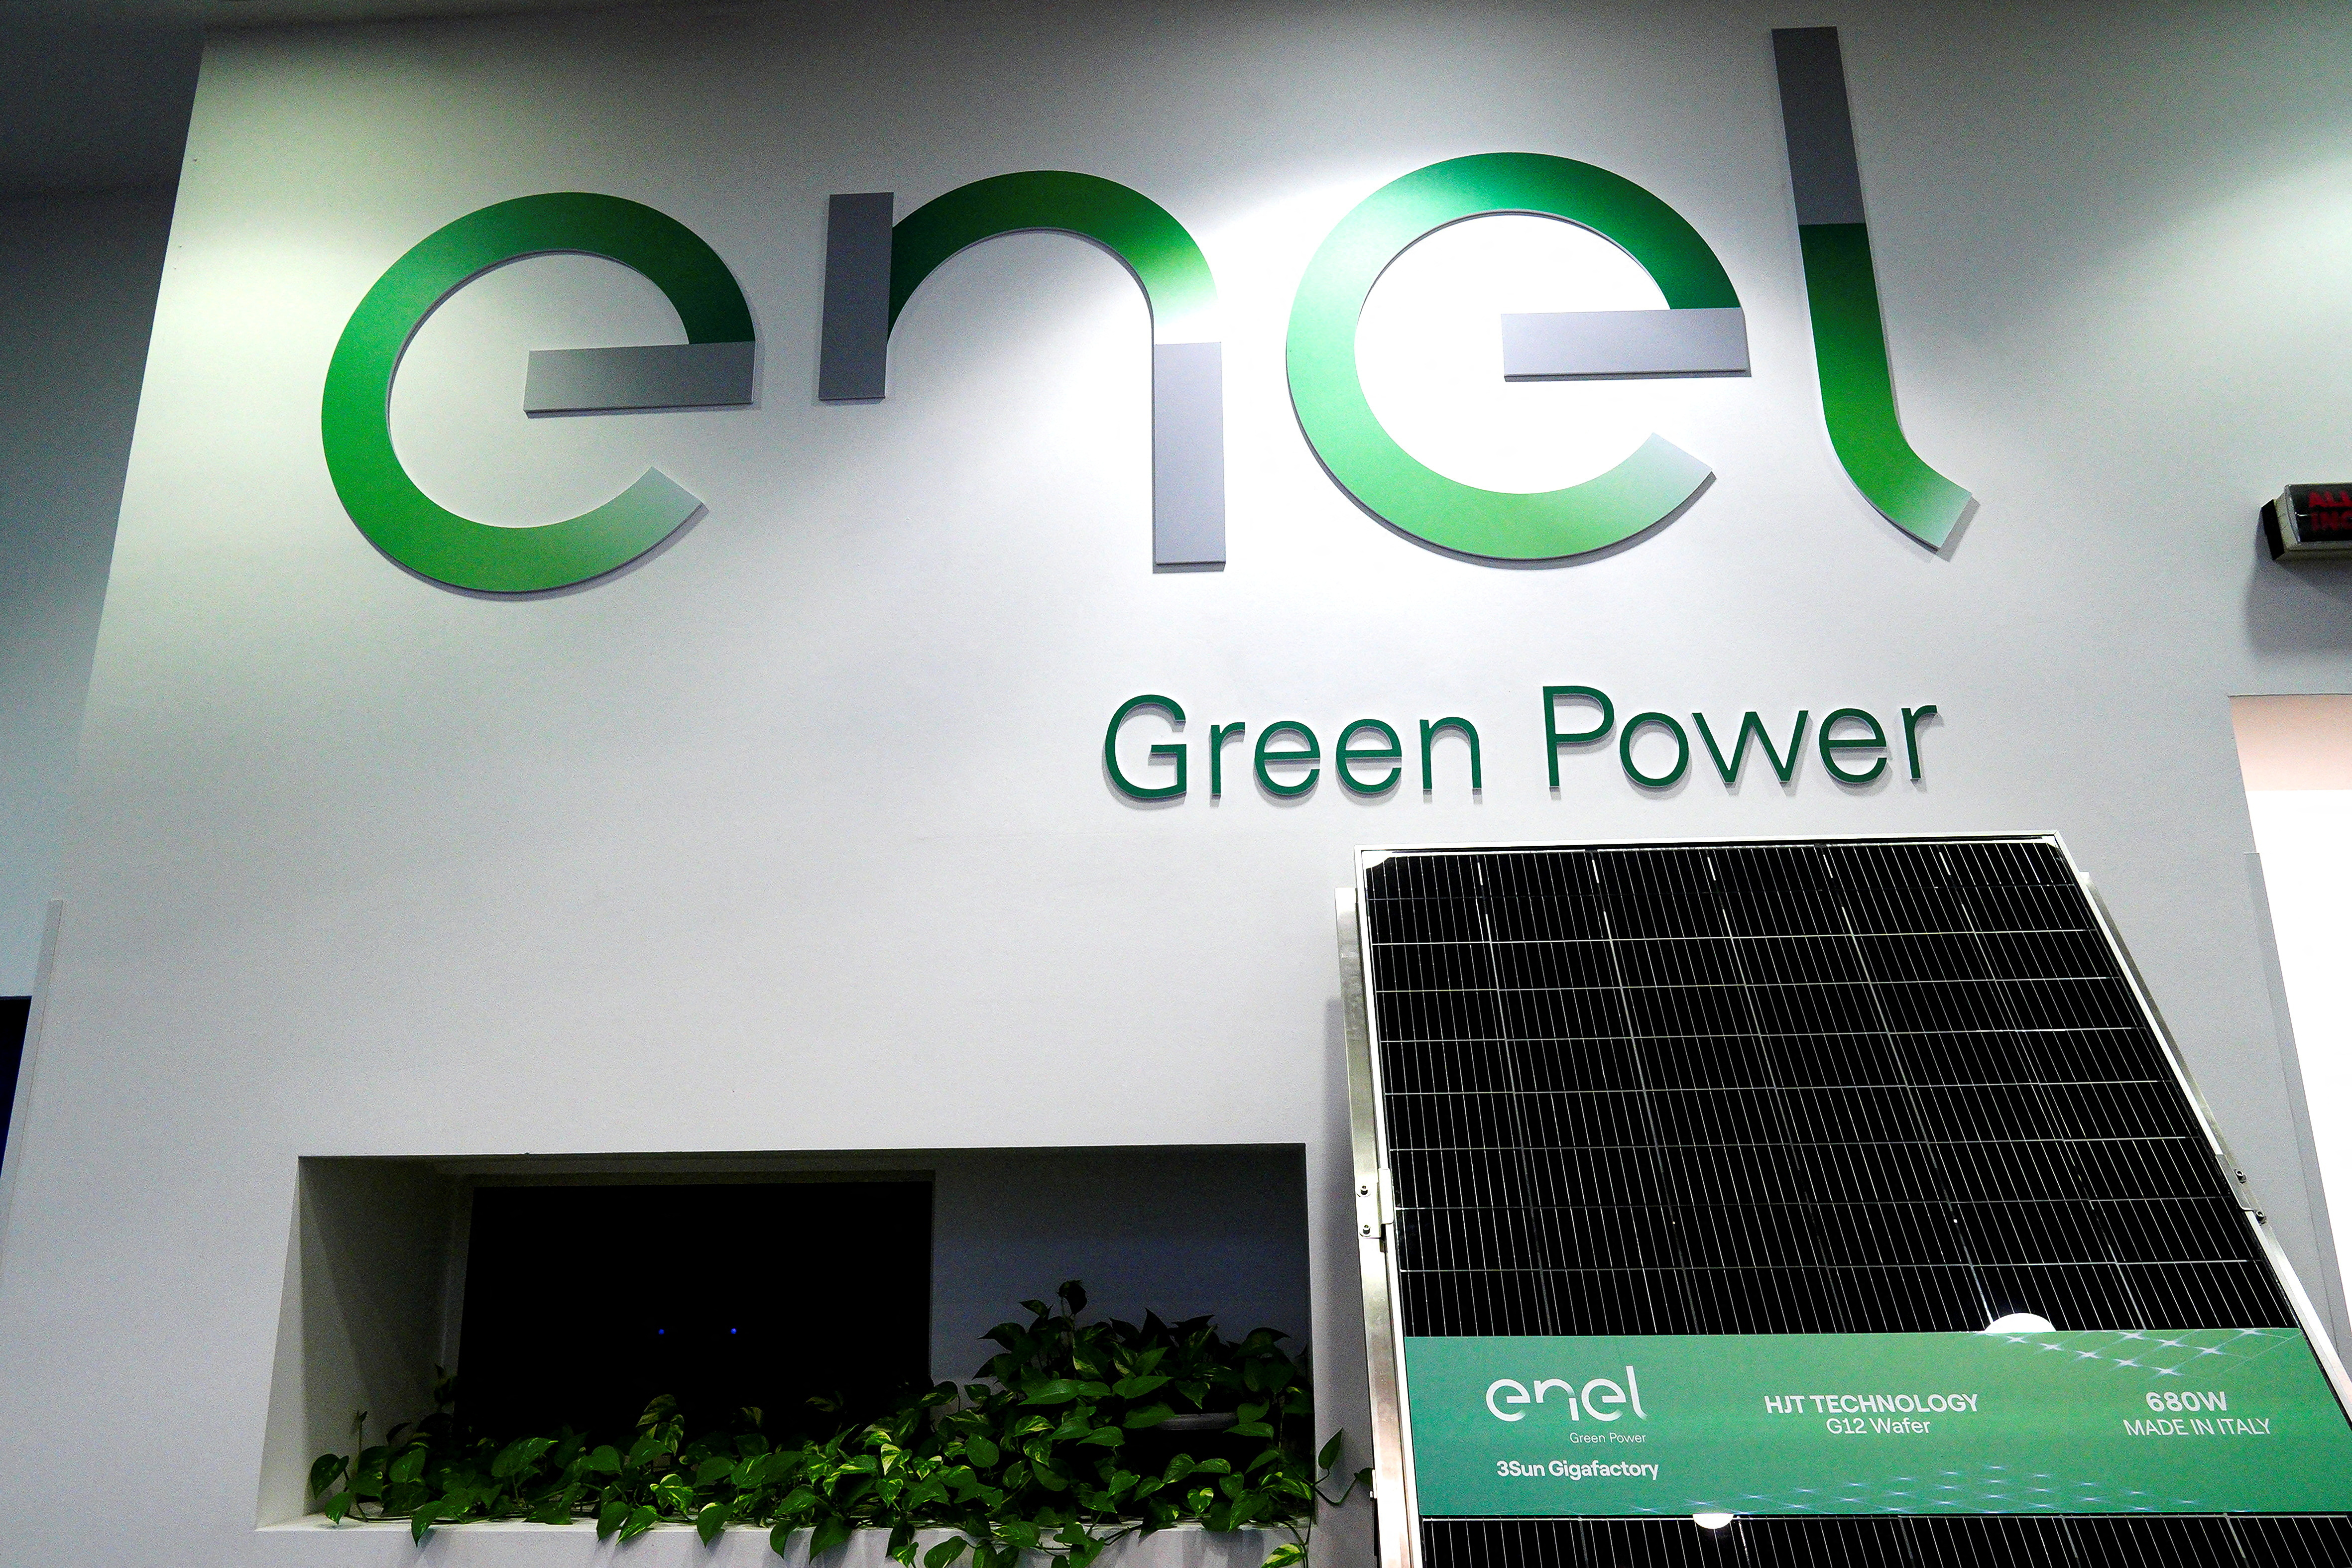 Fontes, Enel Green Power's hybrid plant in Brazil 